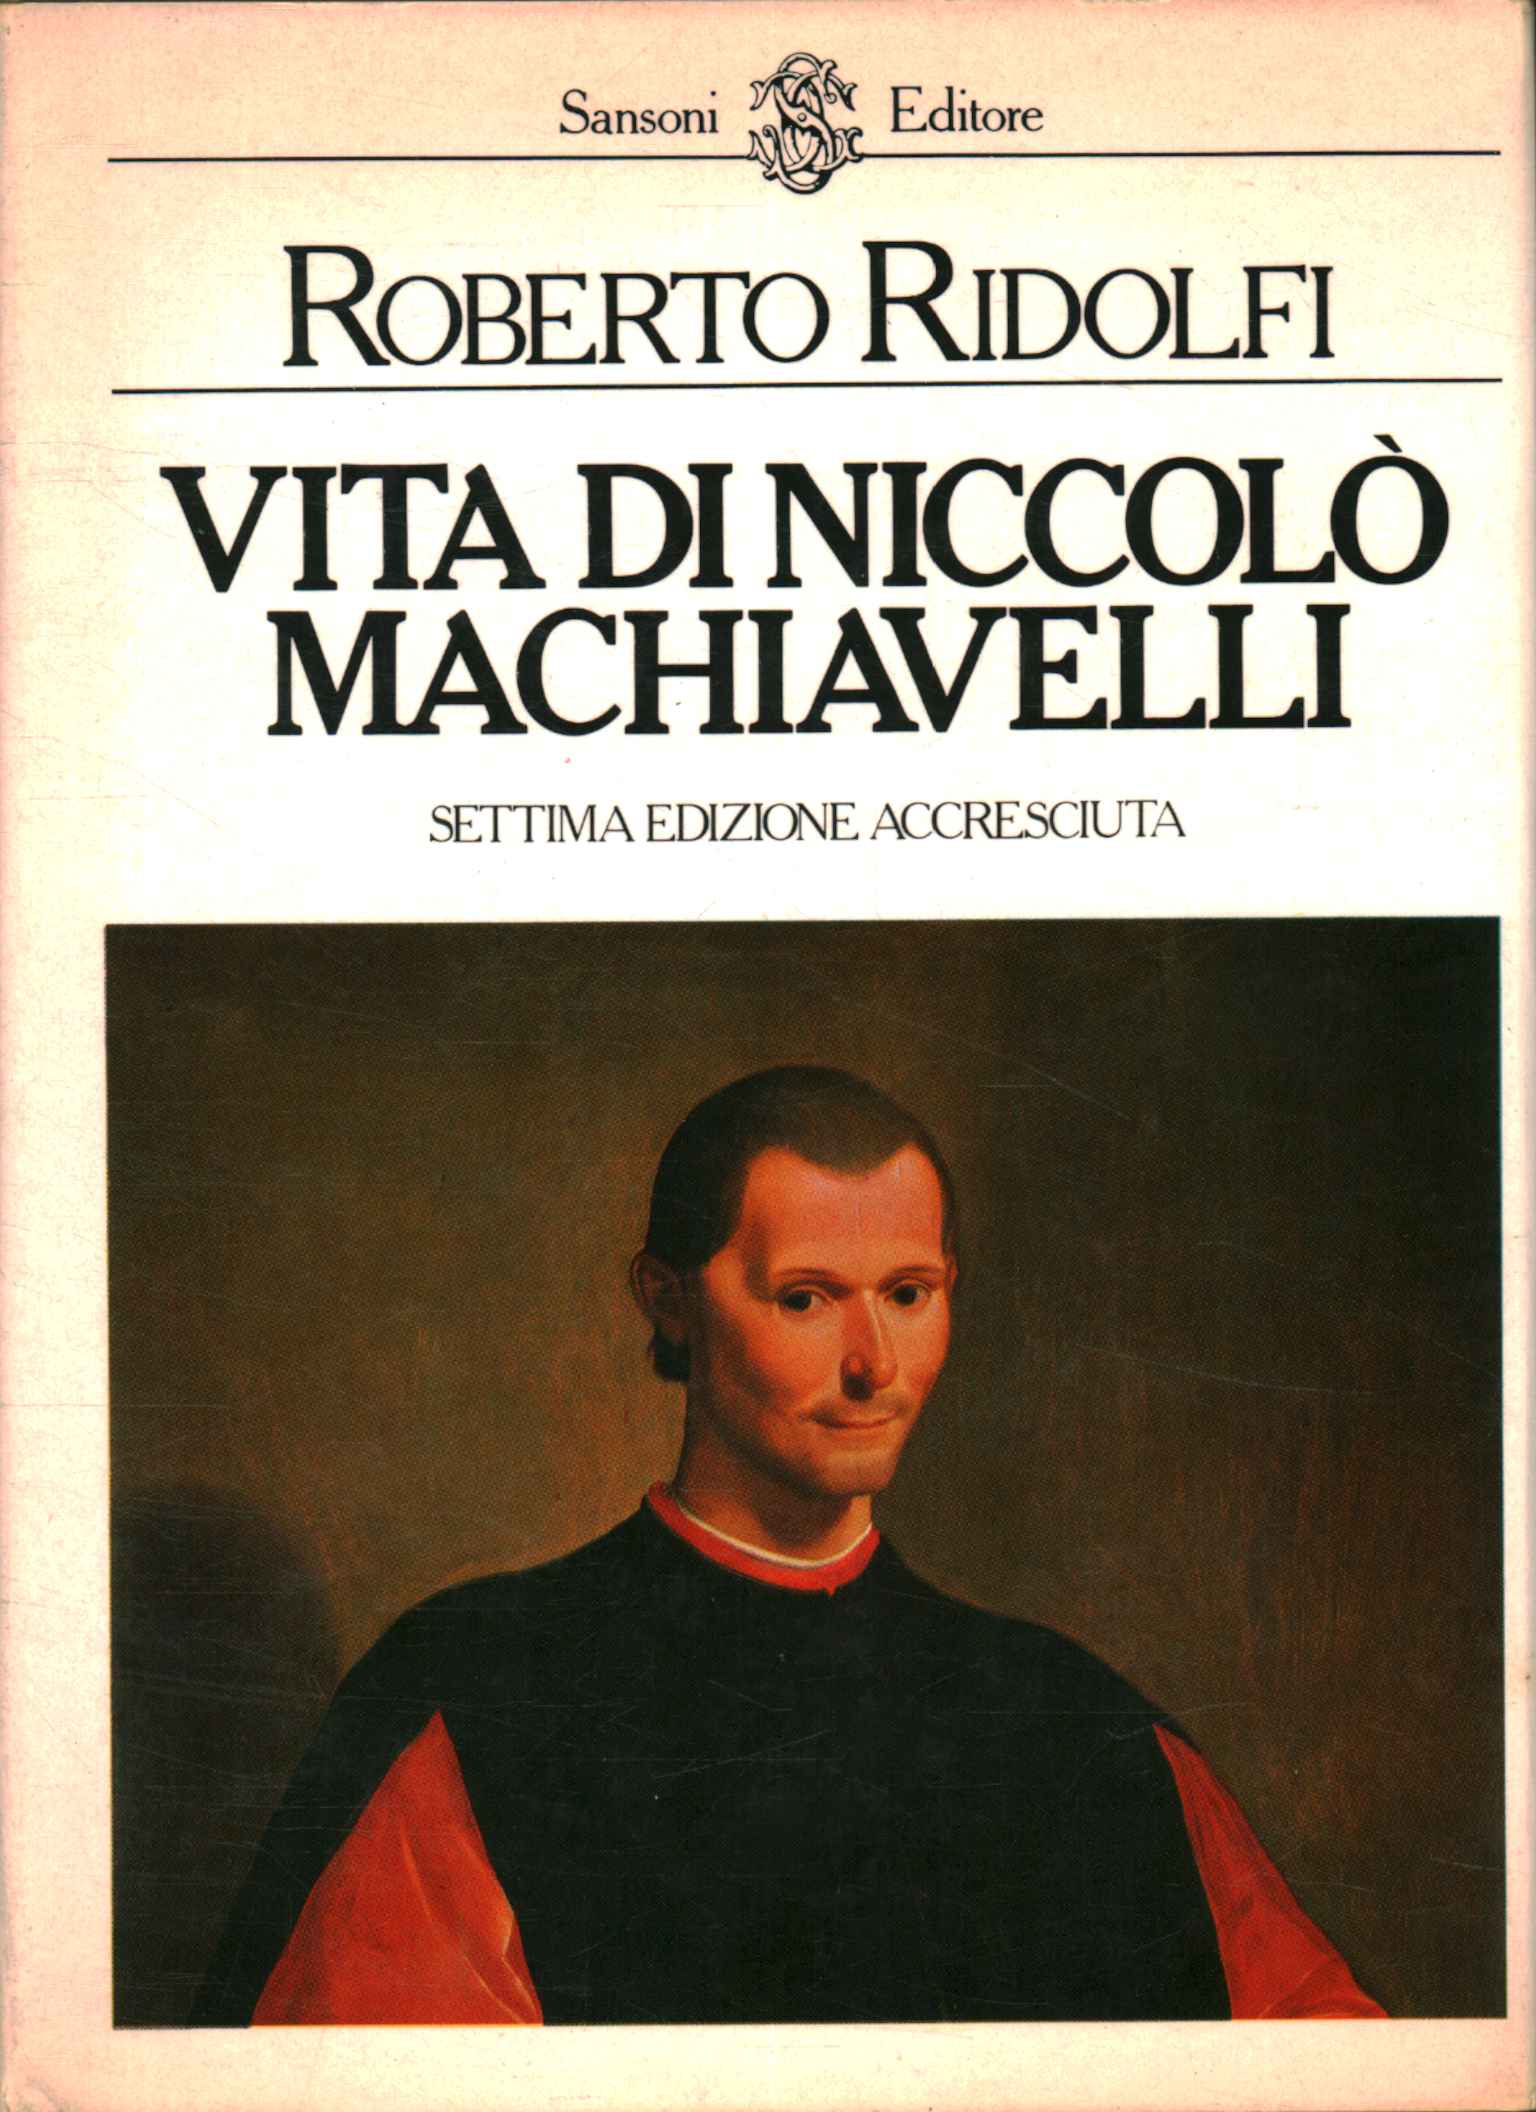 Life of Niccolò Machiavelli